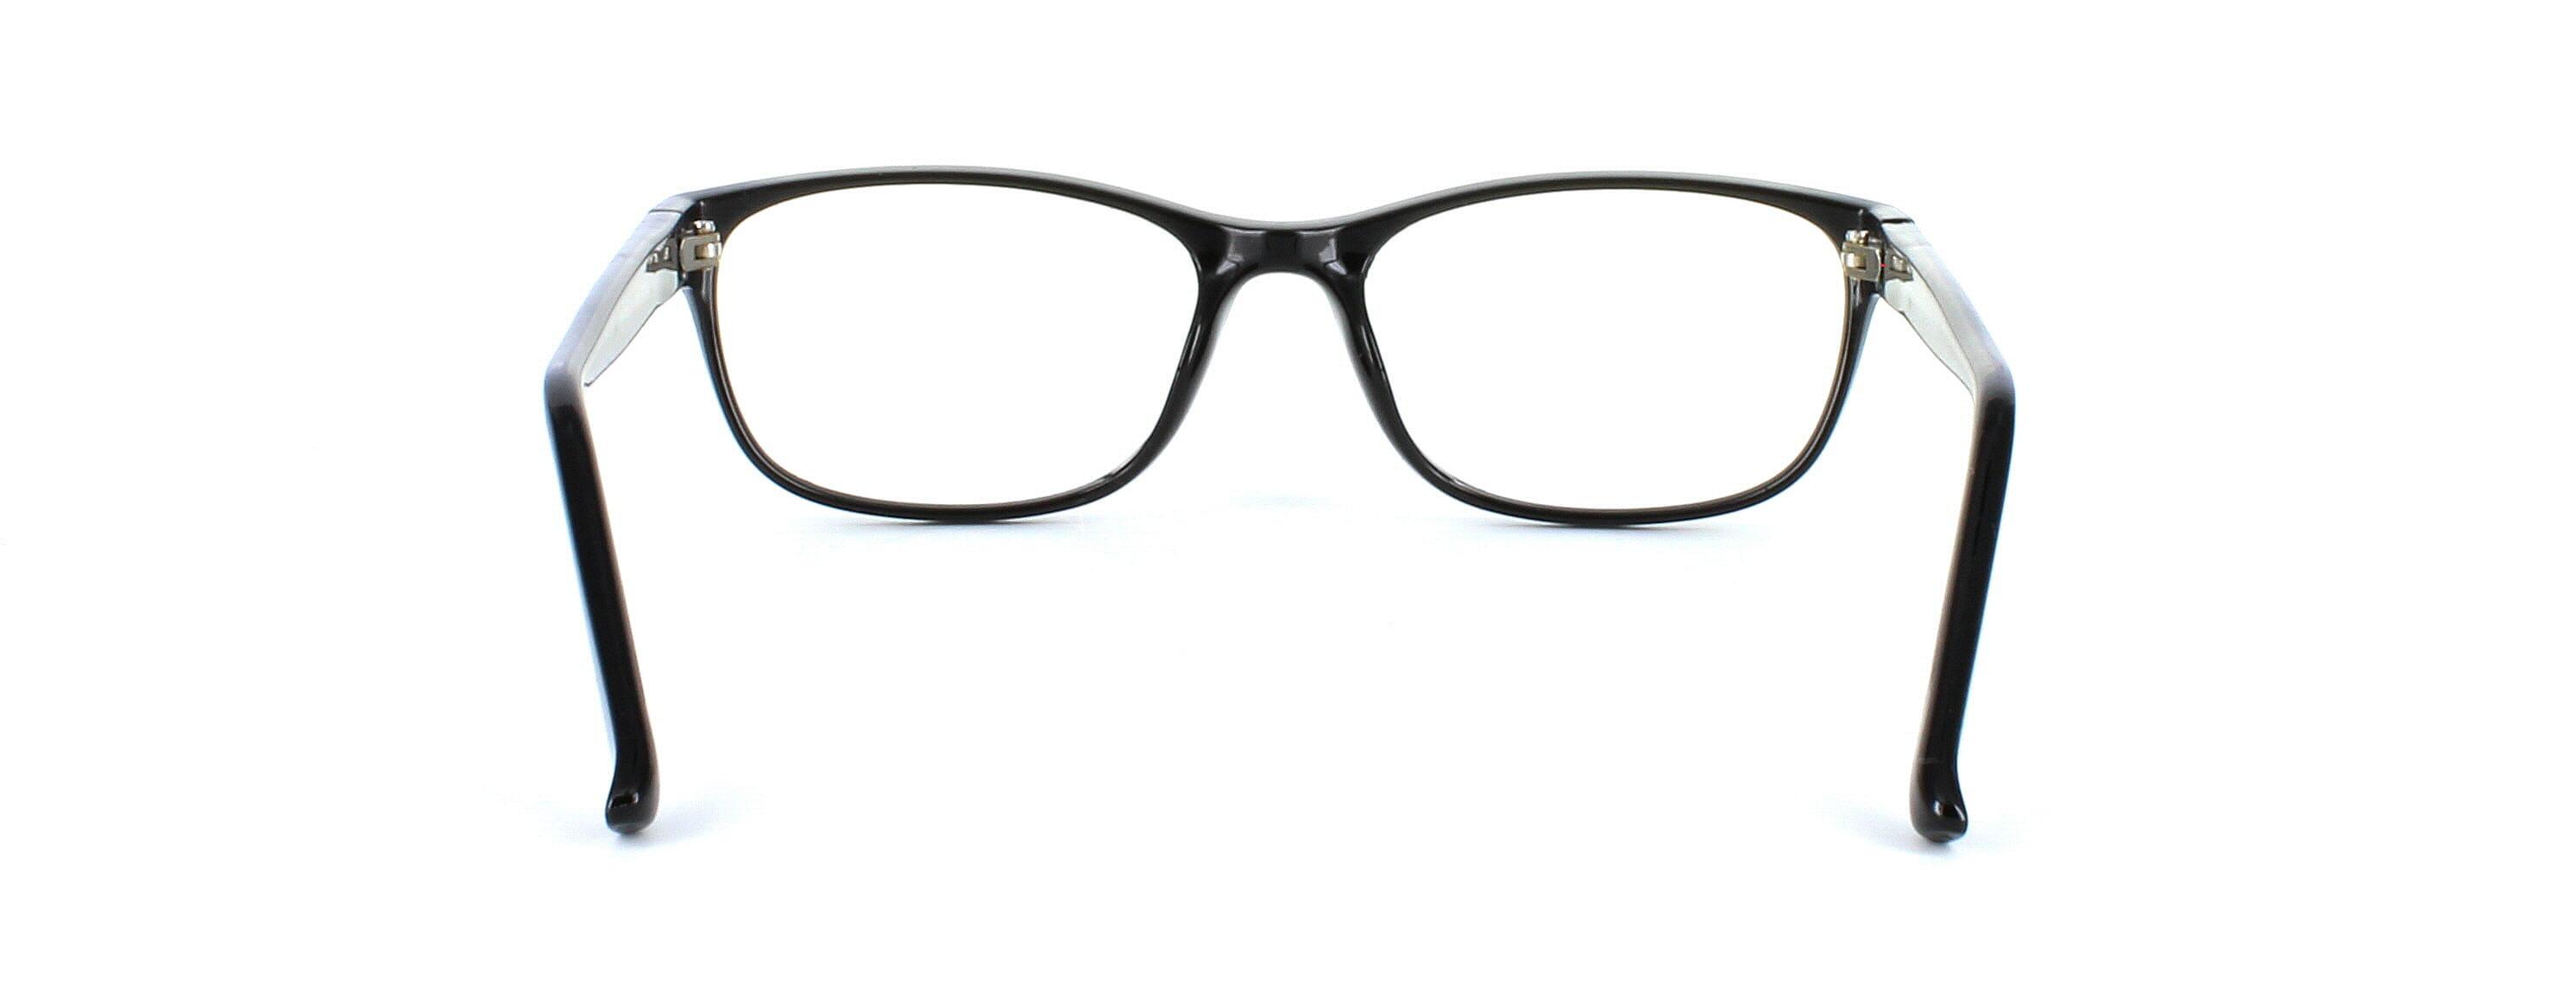 Samba in black - ladies plastic oval shaped glasses frame - image view 4